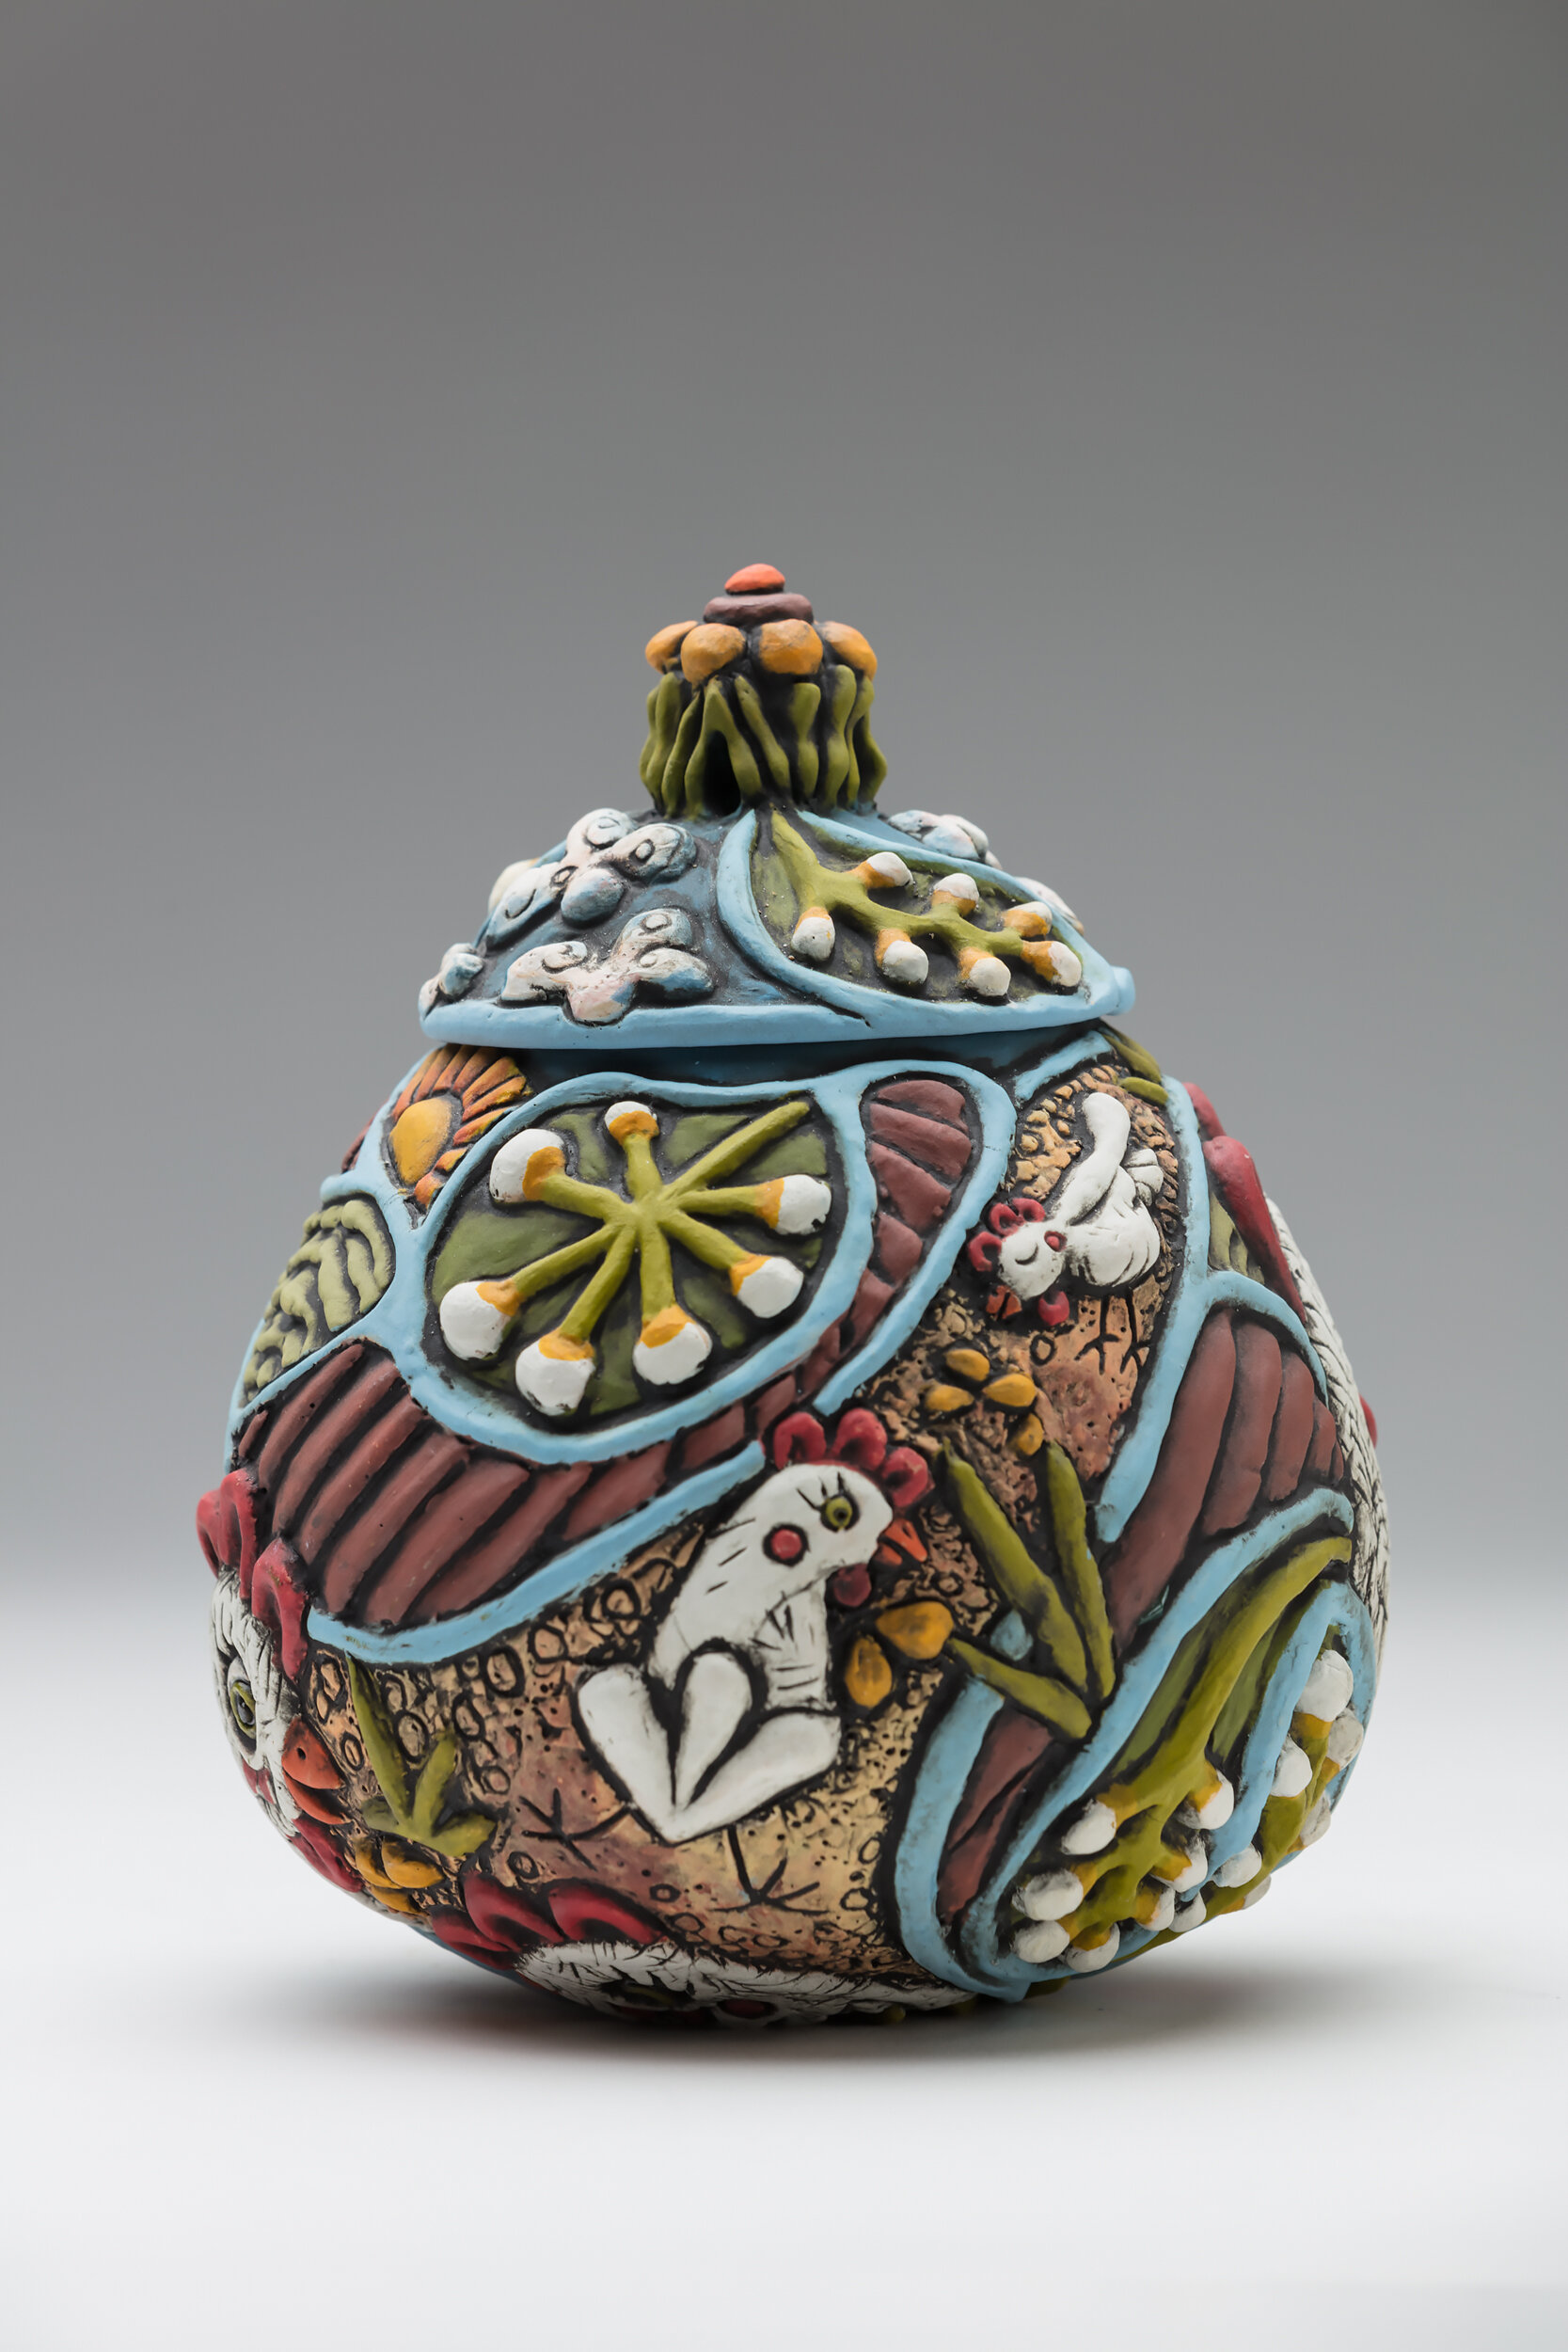 Gallery of ceramics by Julie Woodrow